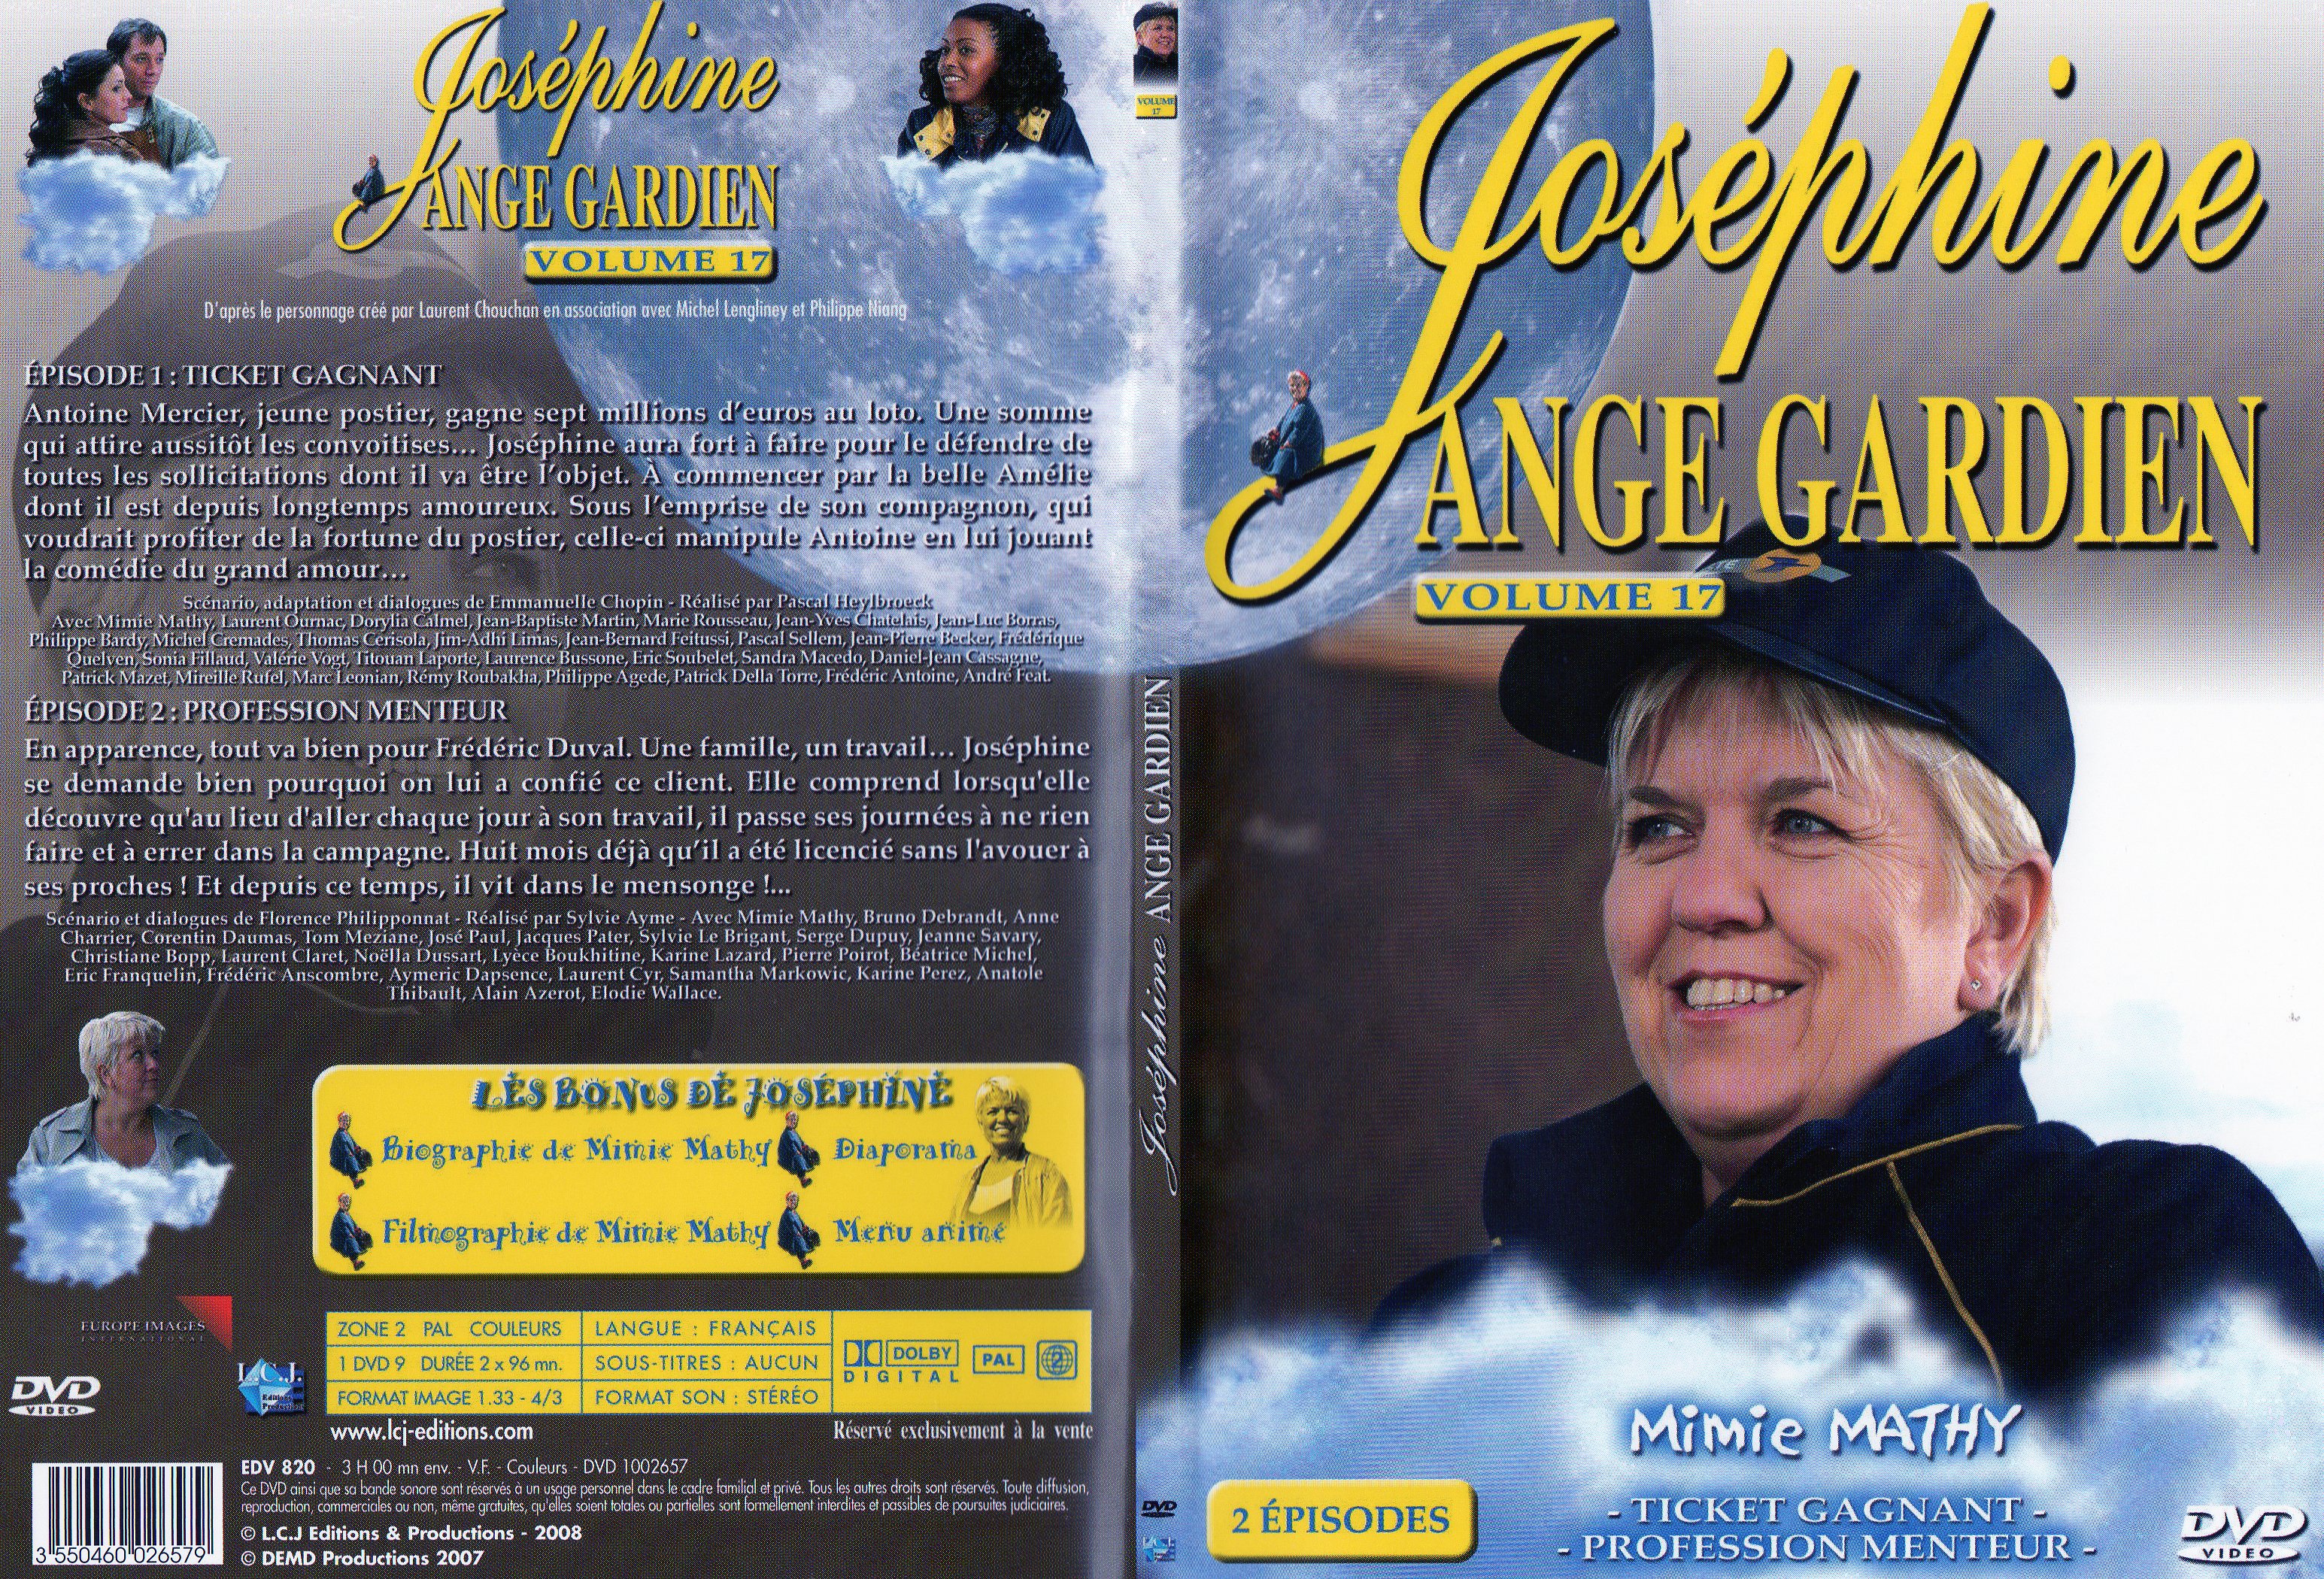 Jaquette DVD Josphine Ange Gardien saison 4 DVD 17